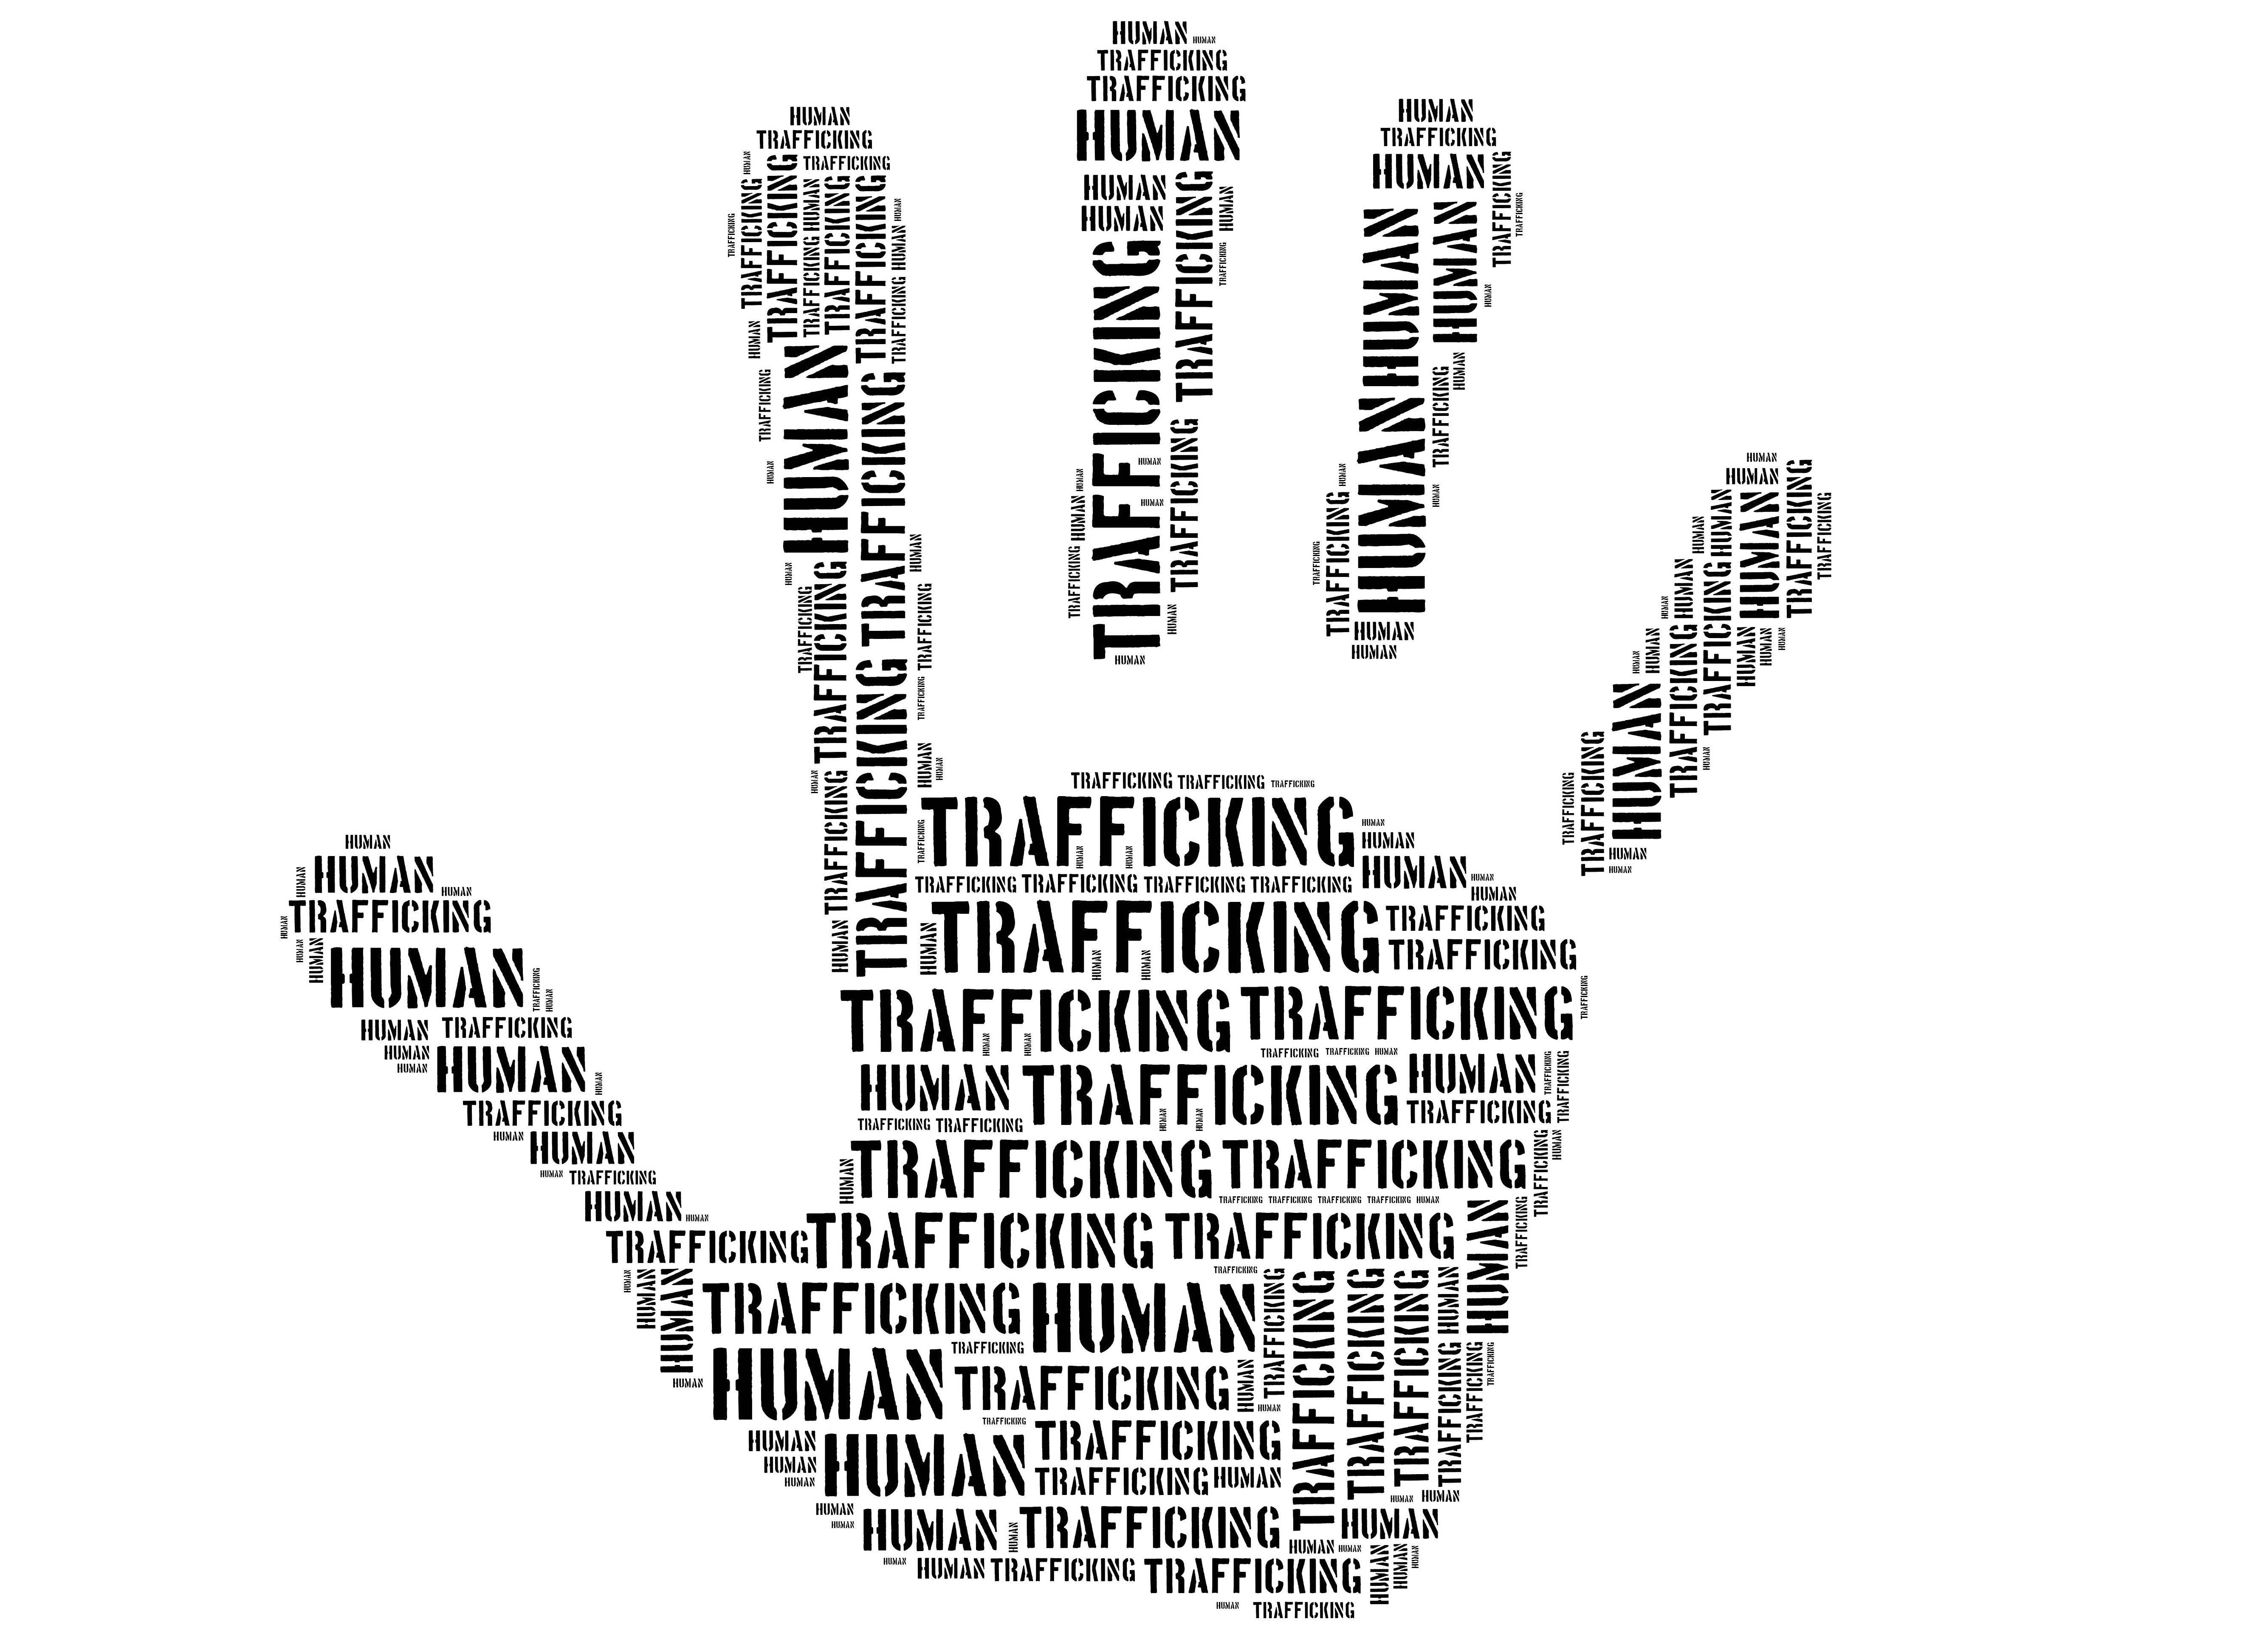 steps to stop human trafficking